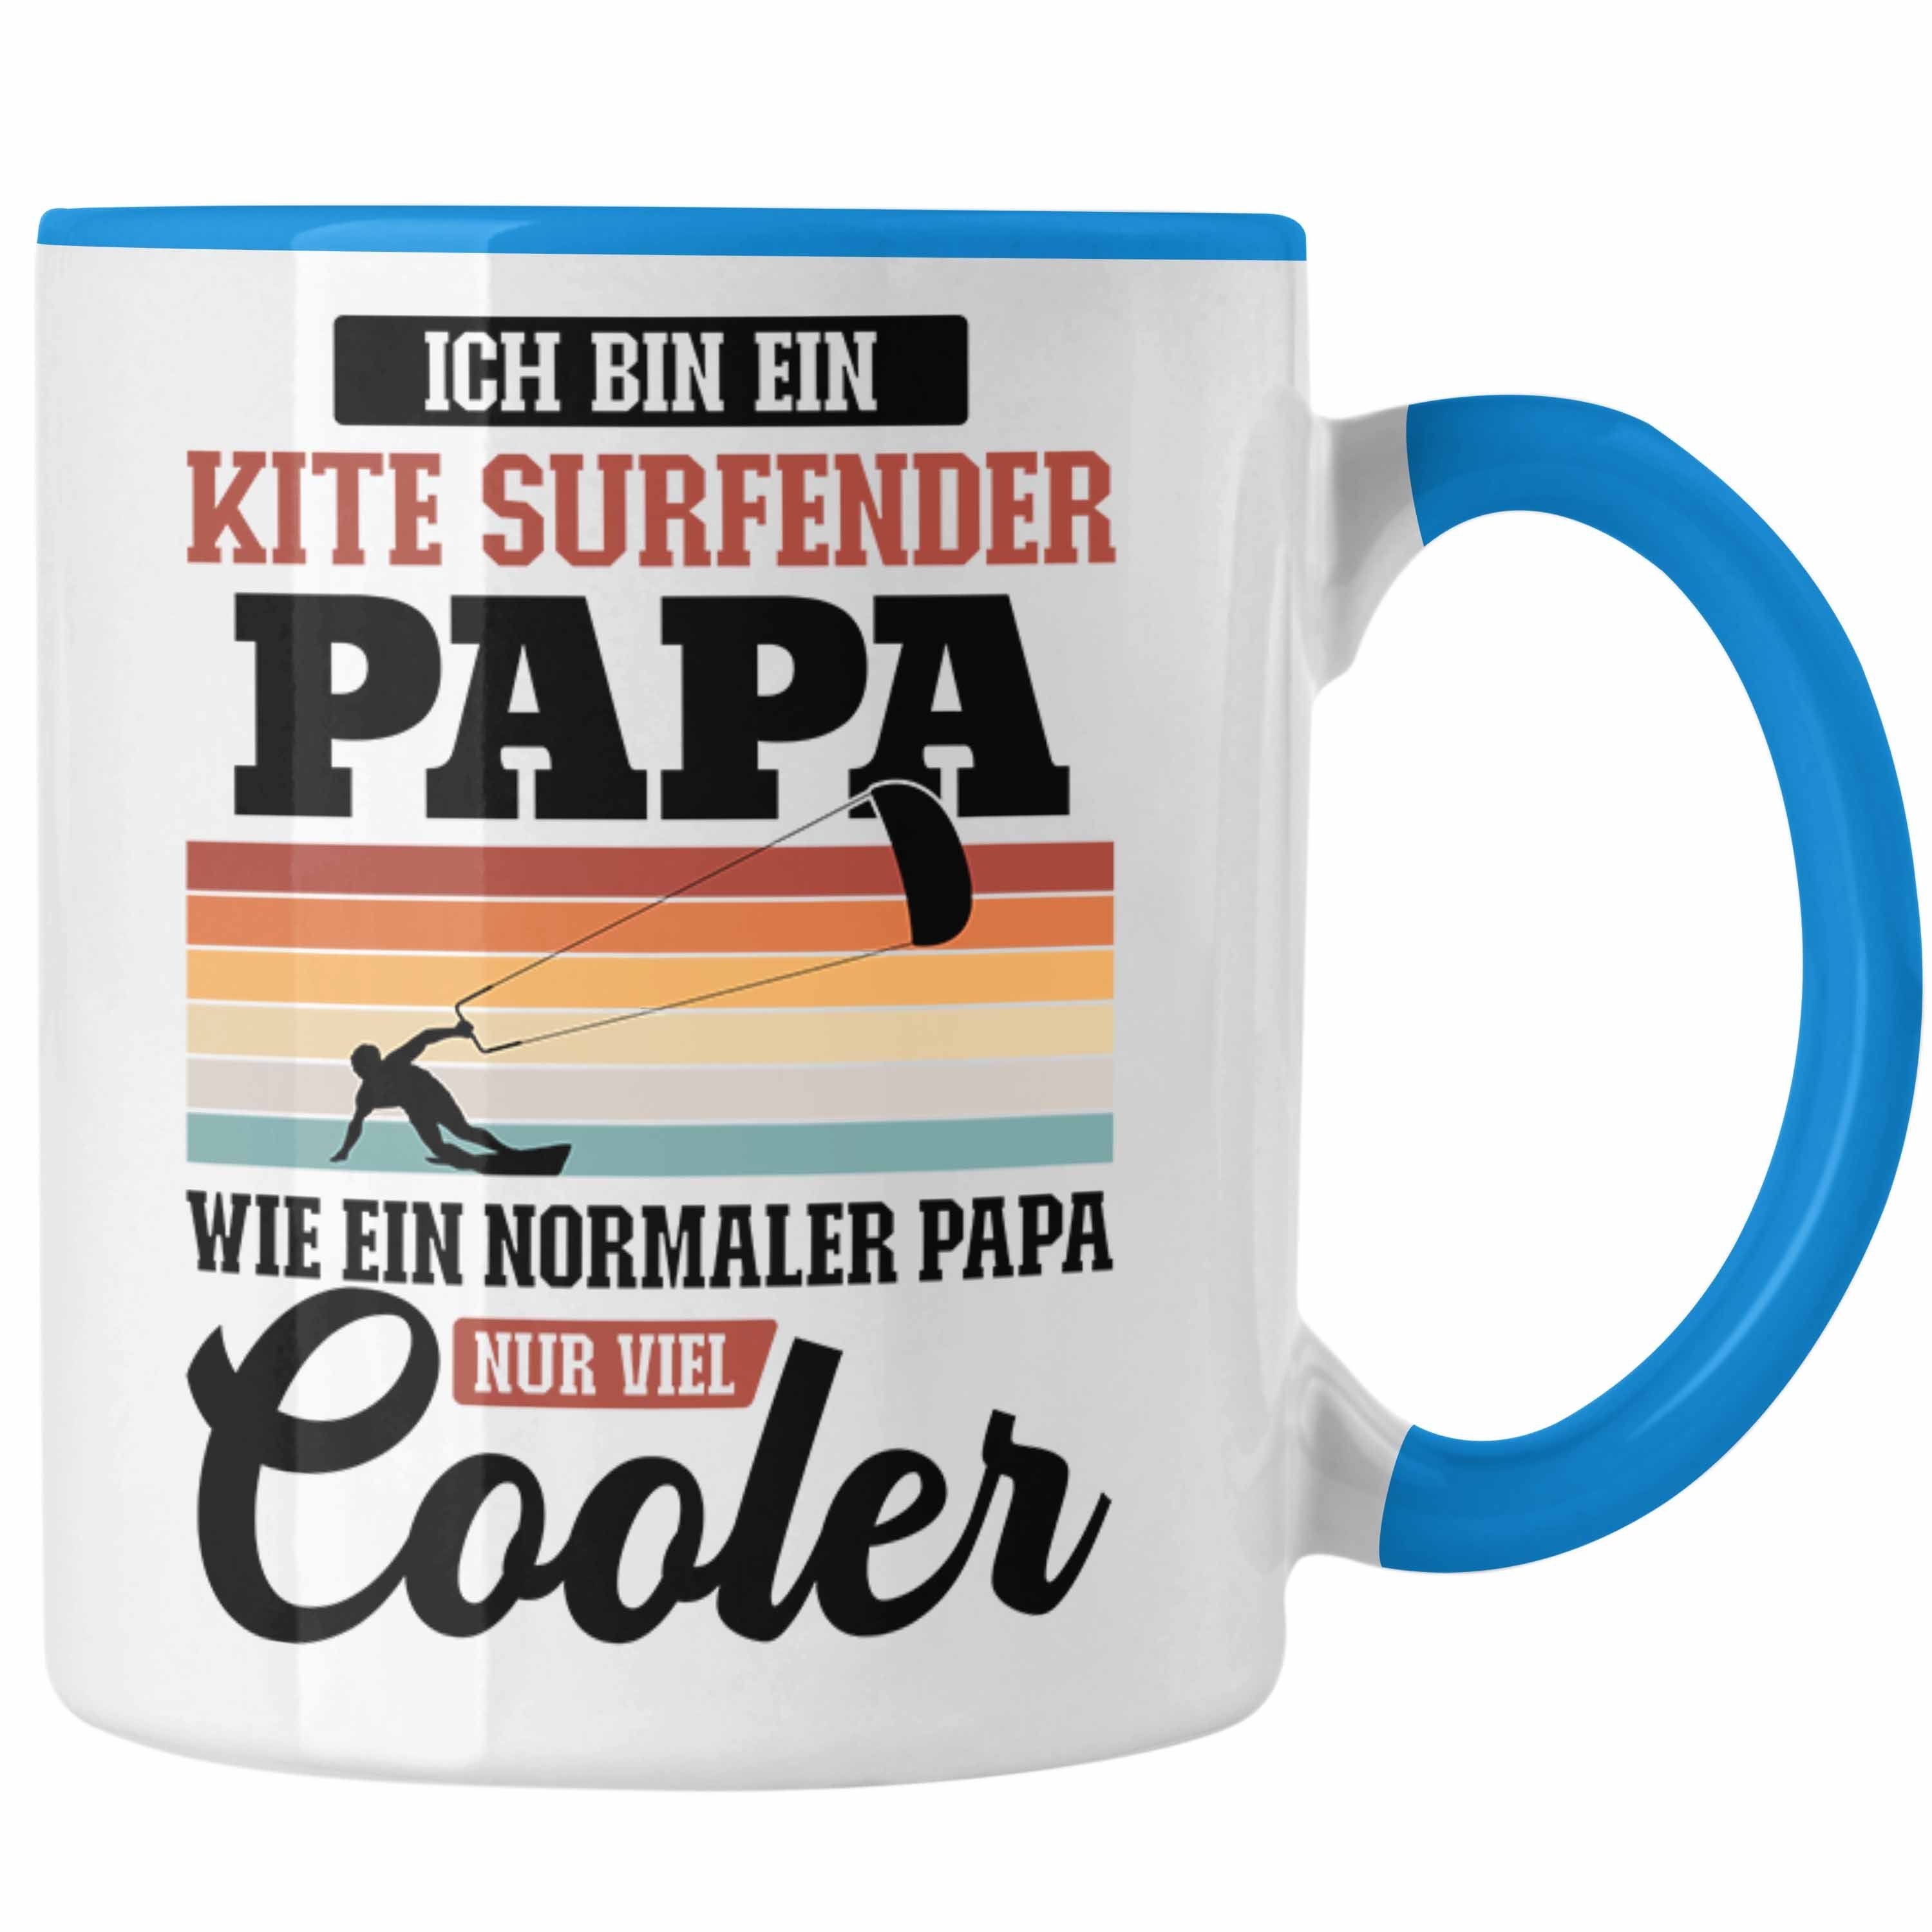 Trendation Tasse Trendation - Kitesurf Papa Kitesurfen Geschenk Tasse Vater Kite Surfender Papa Kitesurfing Blau